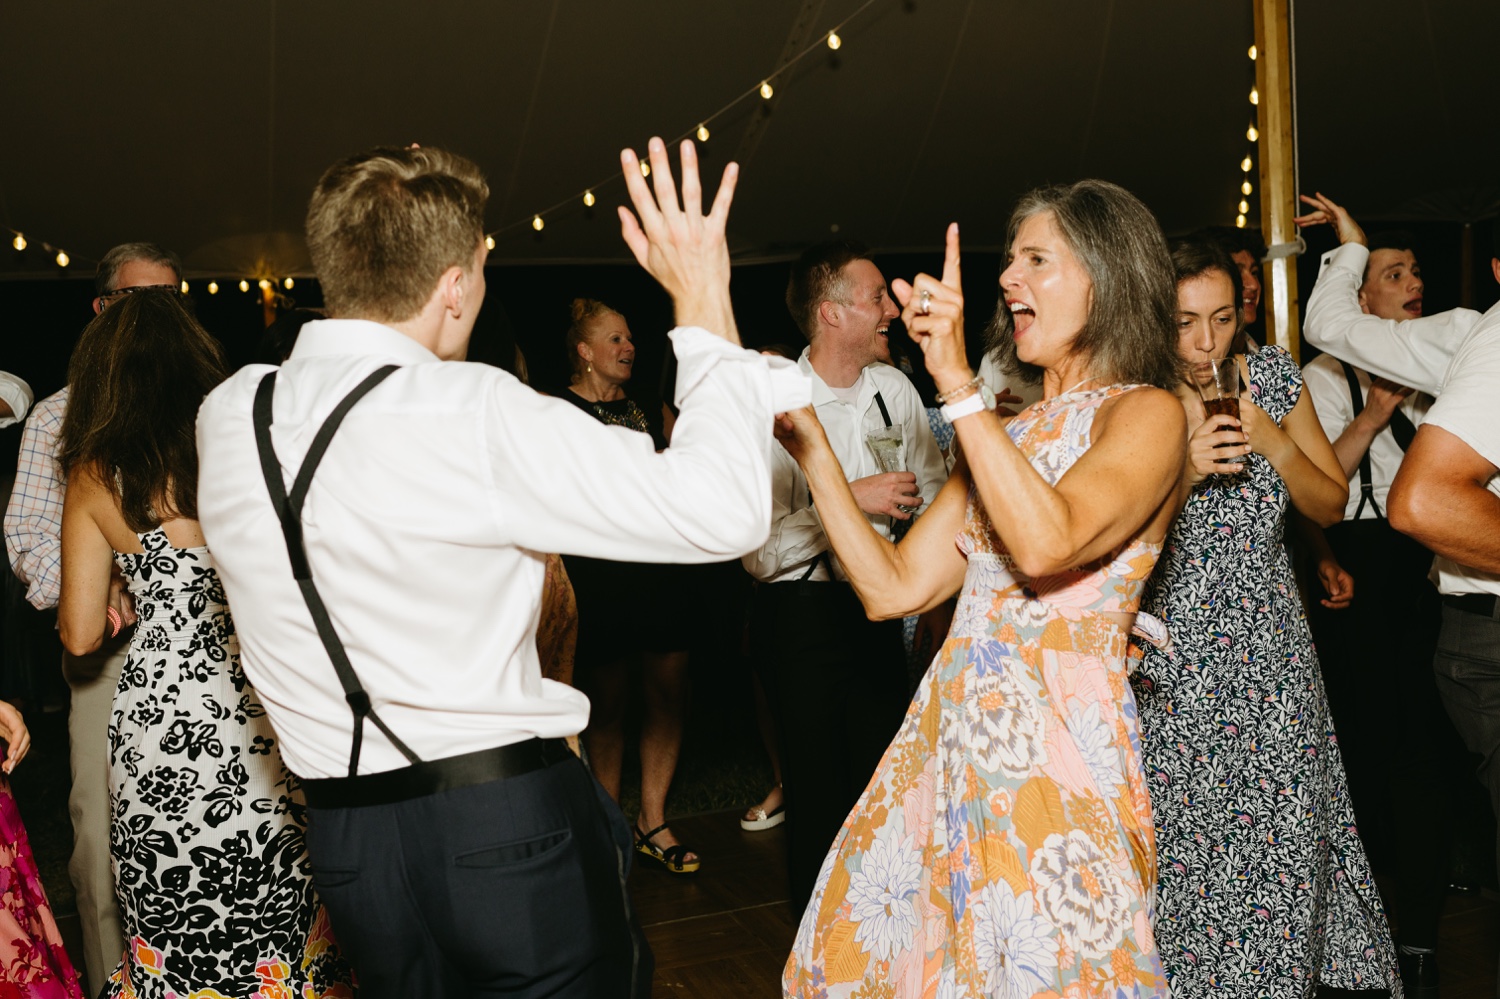 woodstock inn wedding reception guests dancing